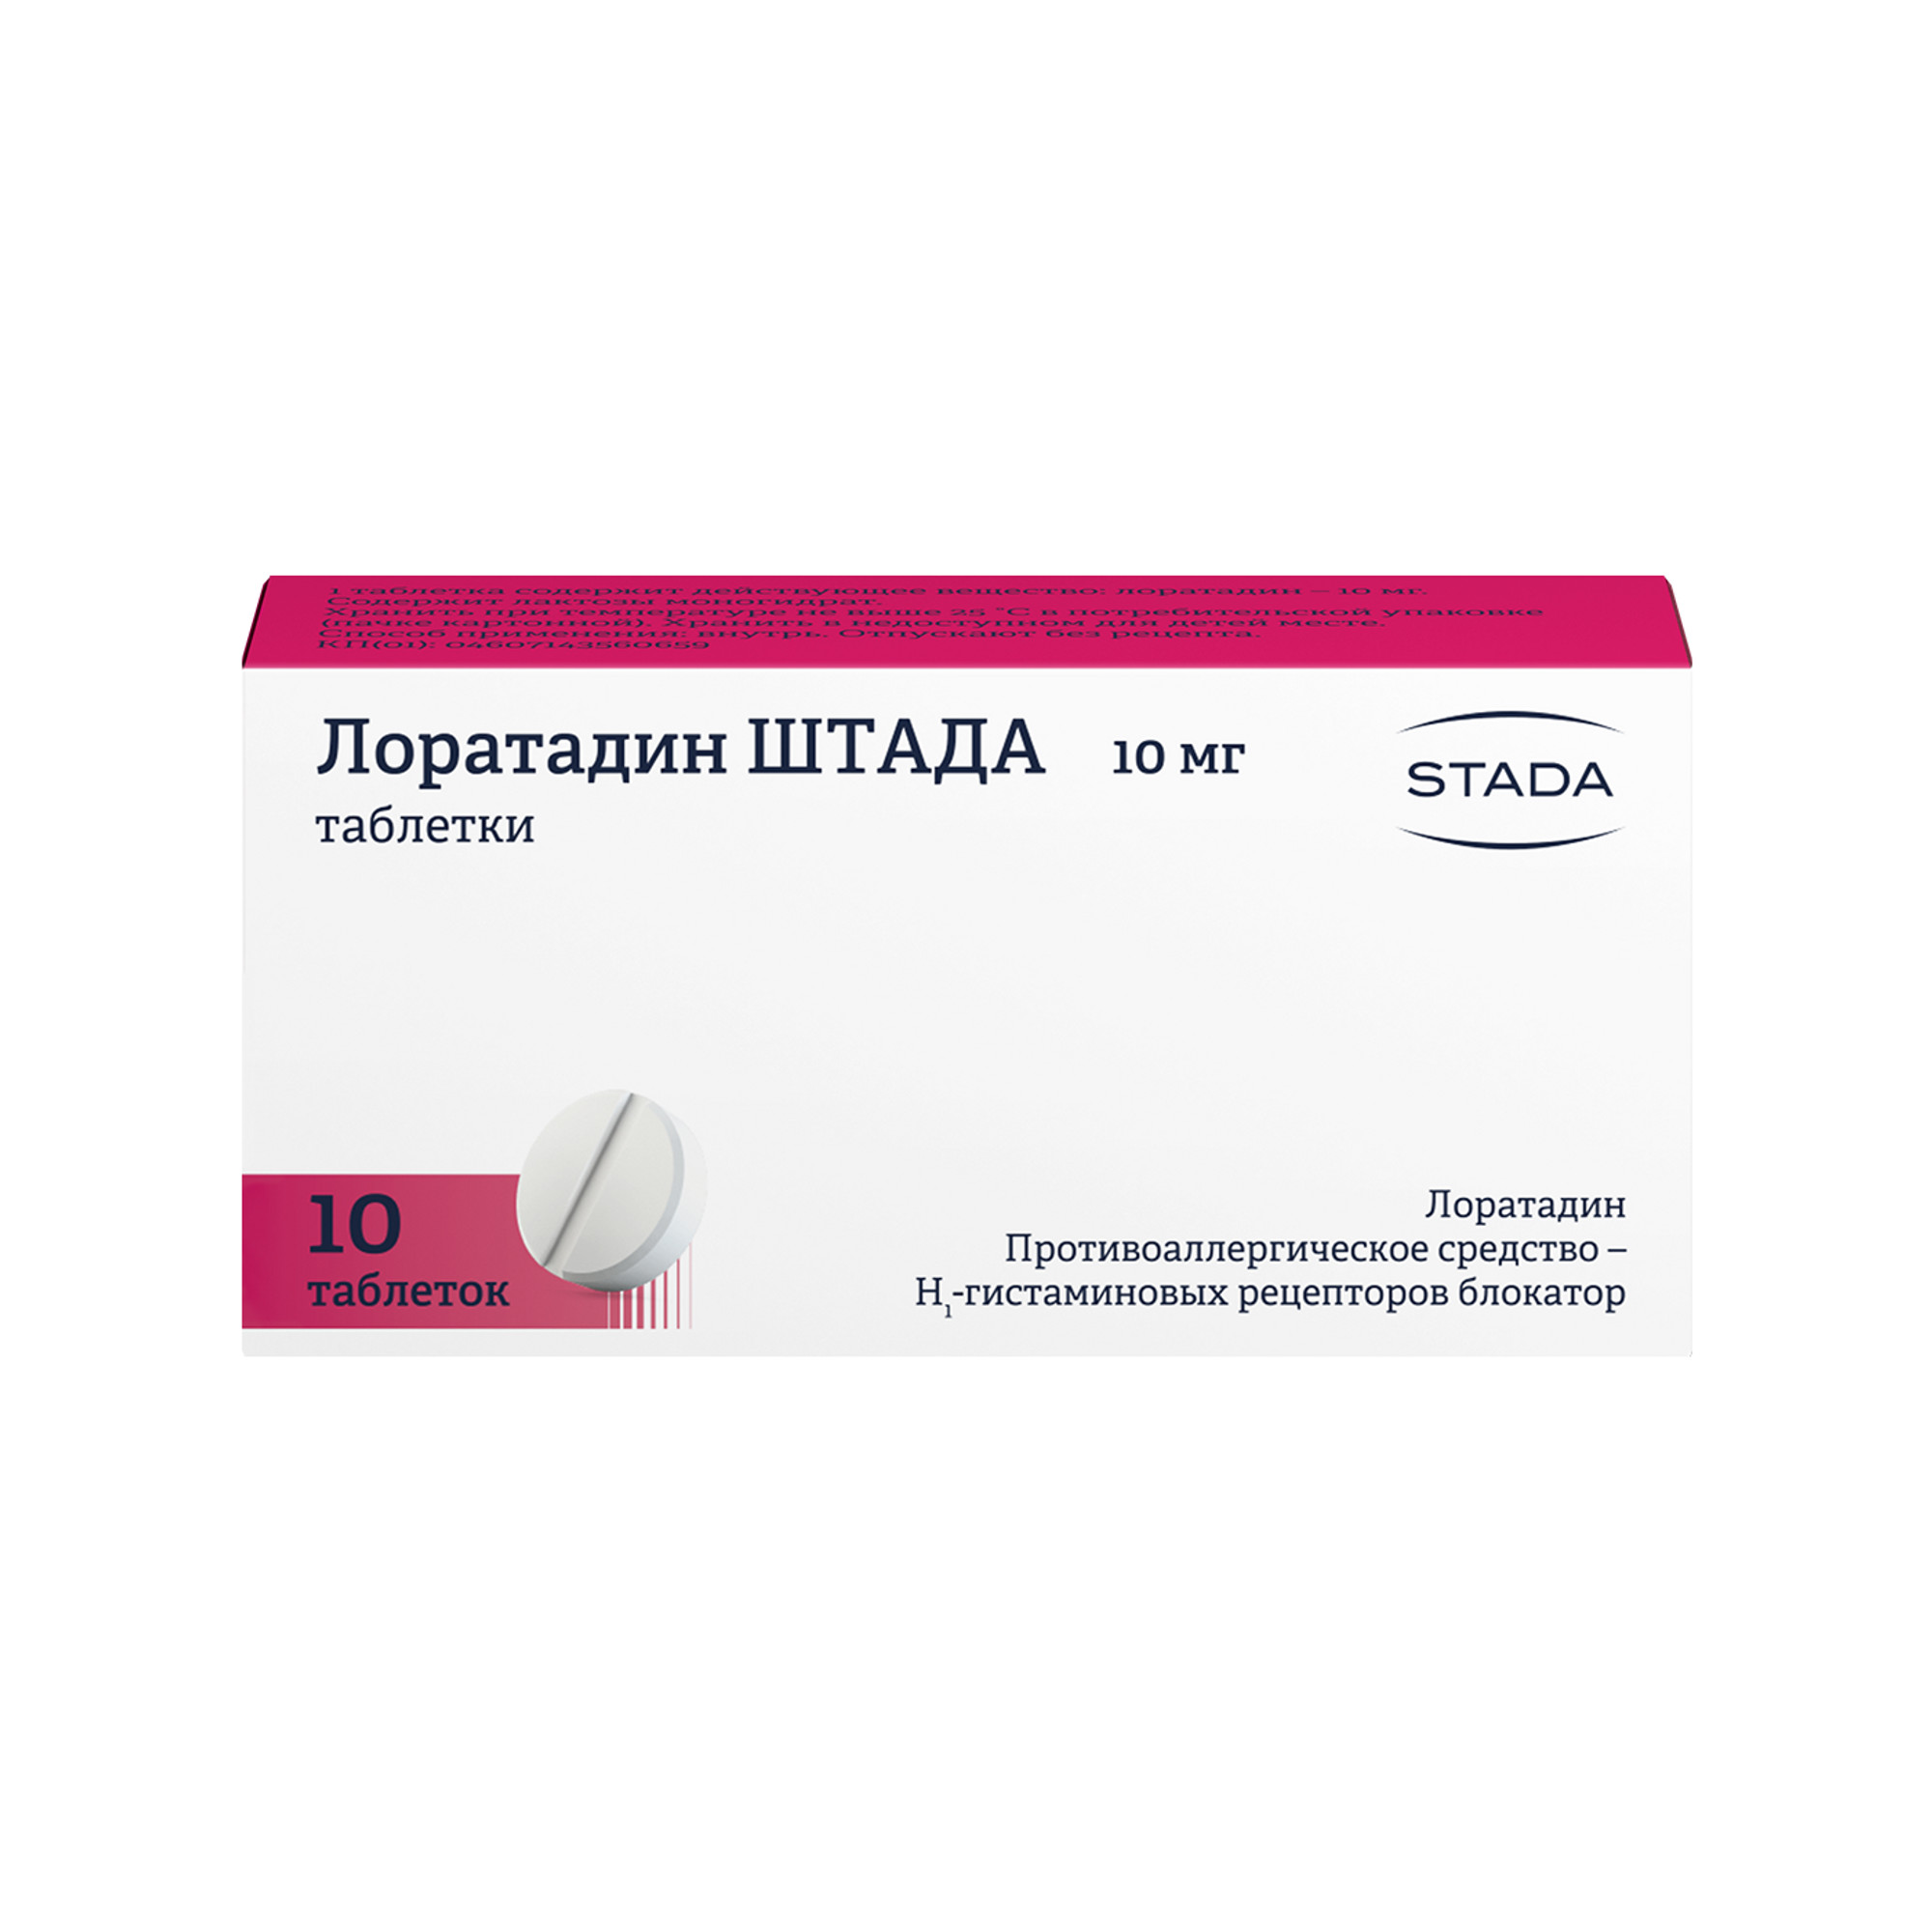 Лоратадин-Штада, таблетки 10 мг, 10 шт. лоратадин вертекс таблетки 10 мг 30 шт